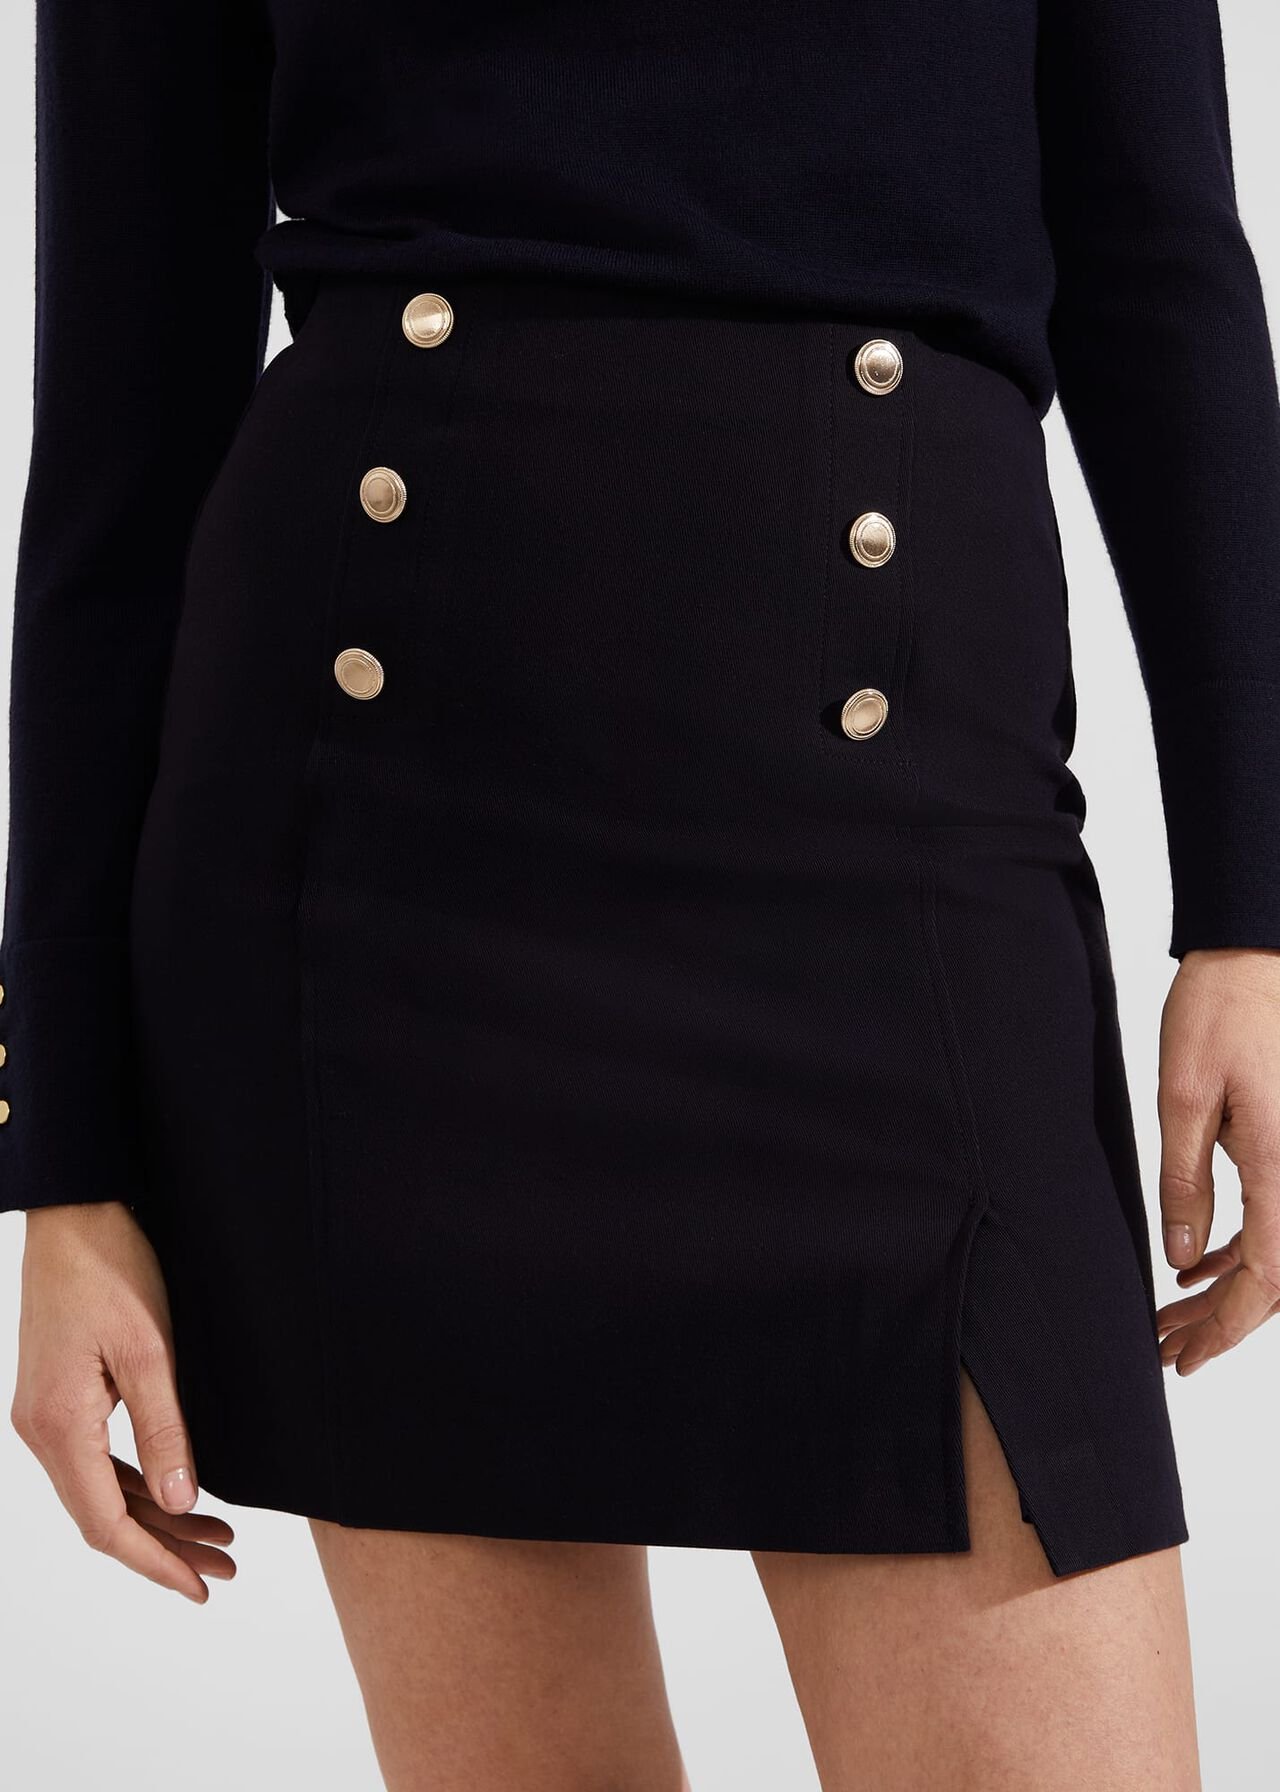 Hana Cotton Blend Skirt, Navy, hi-res